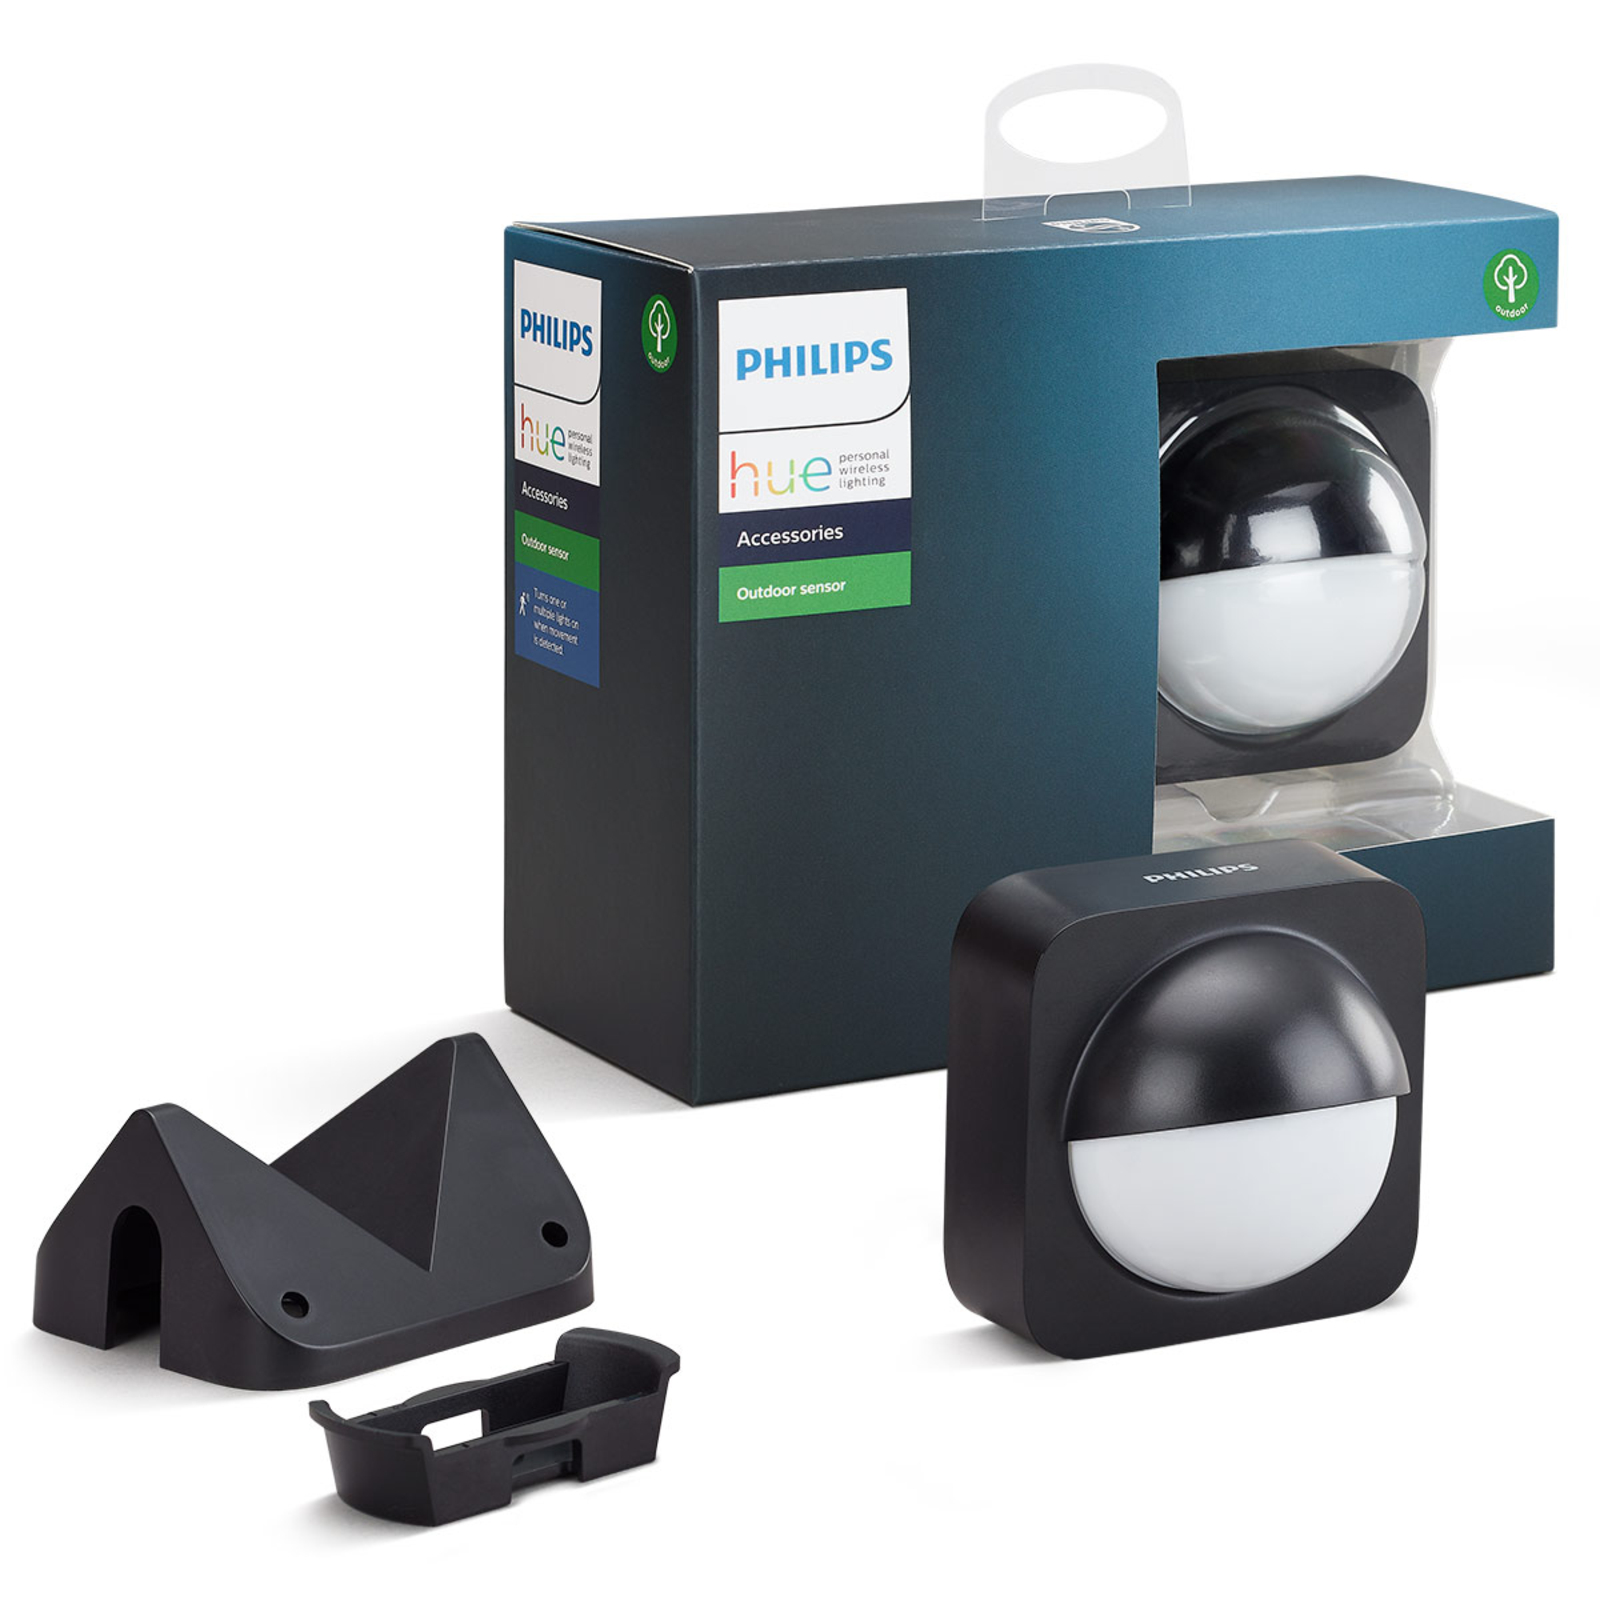 Philips Hue Outdoor Sensor motion detector